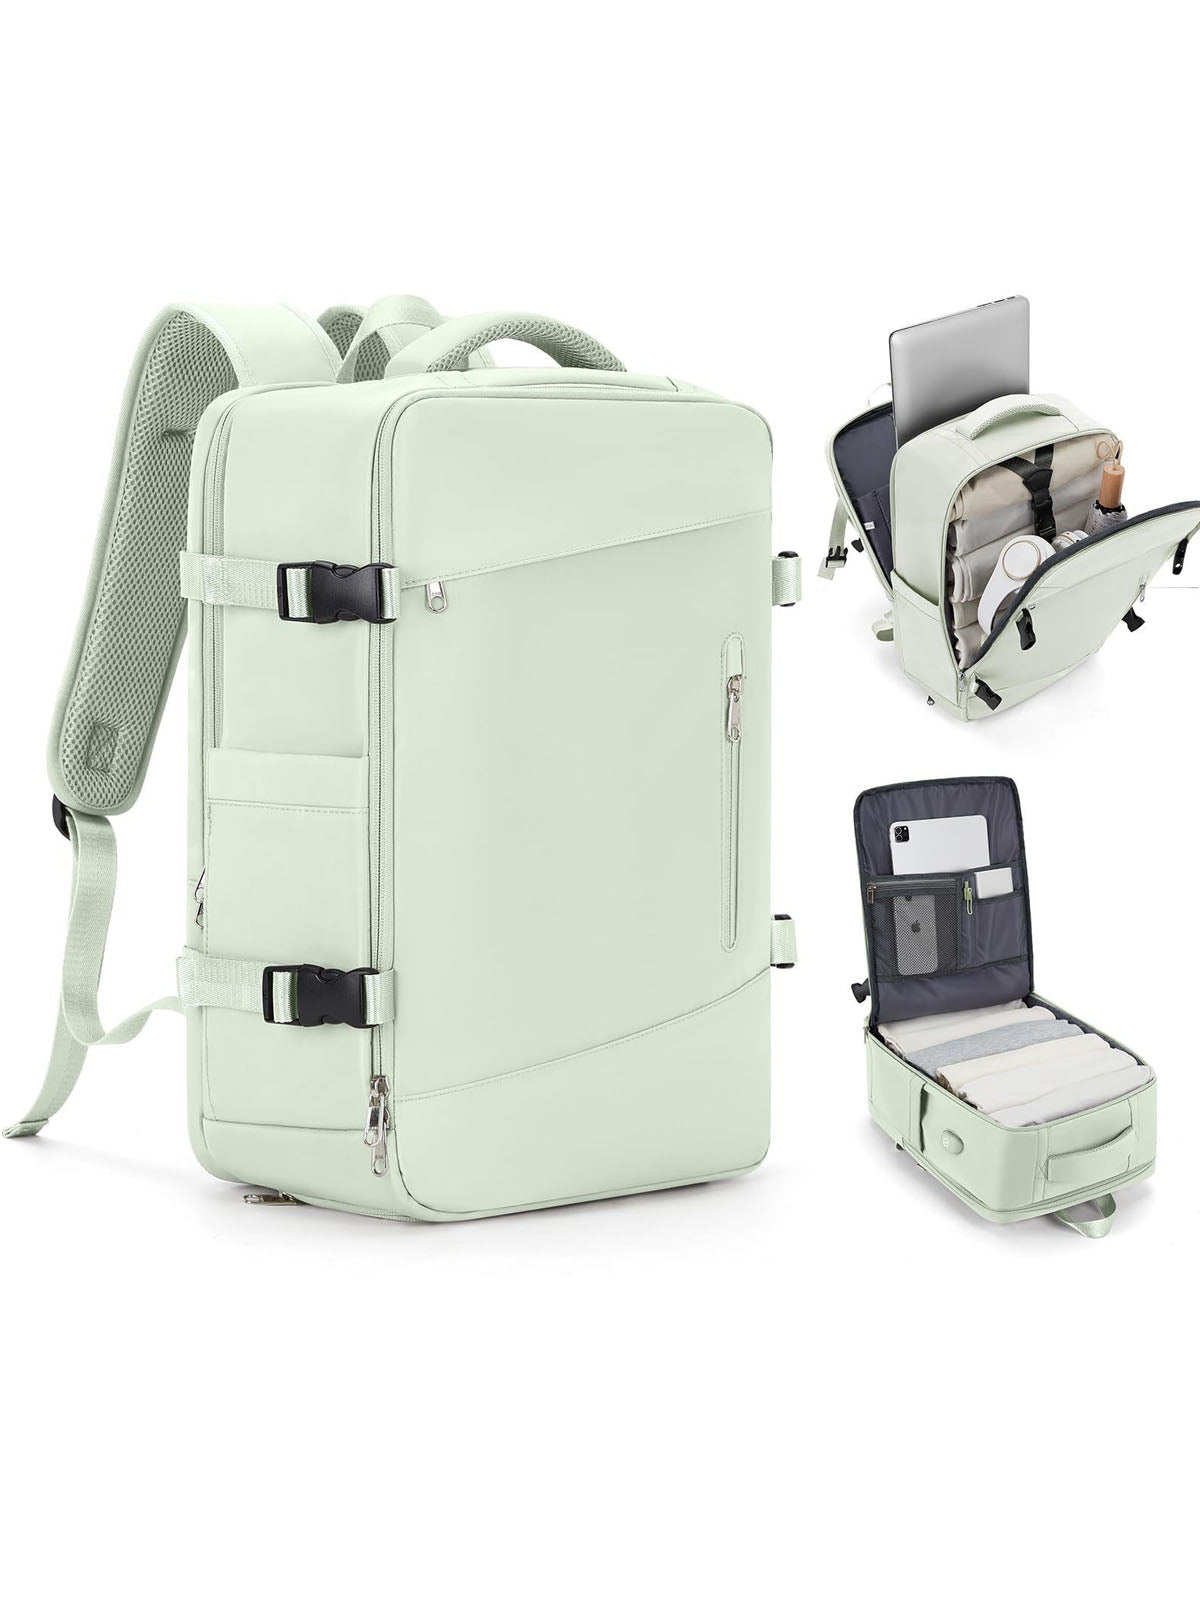 KNosce Travel Backpack - Mint Green